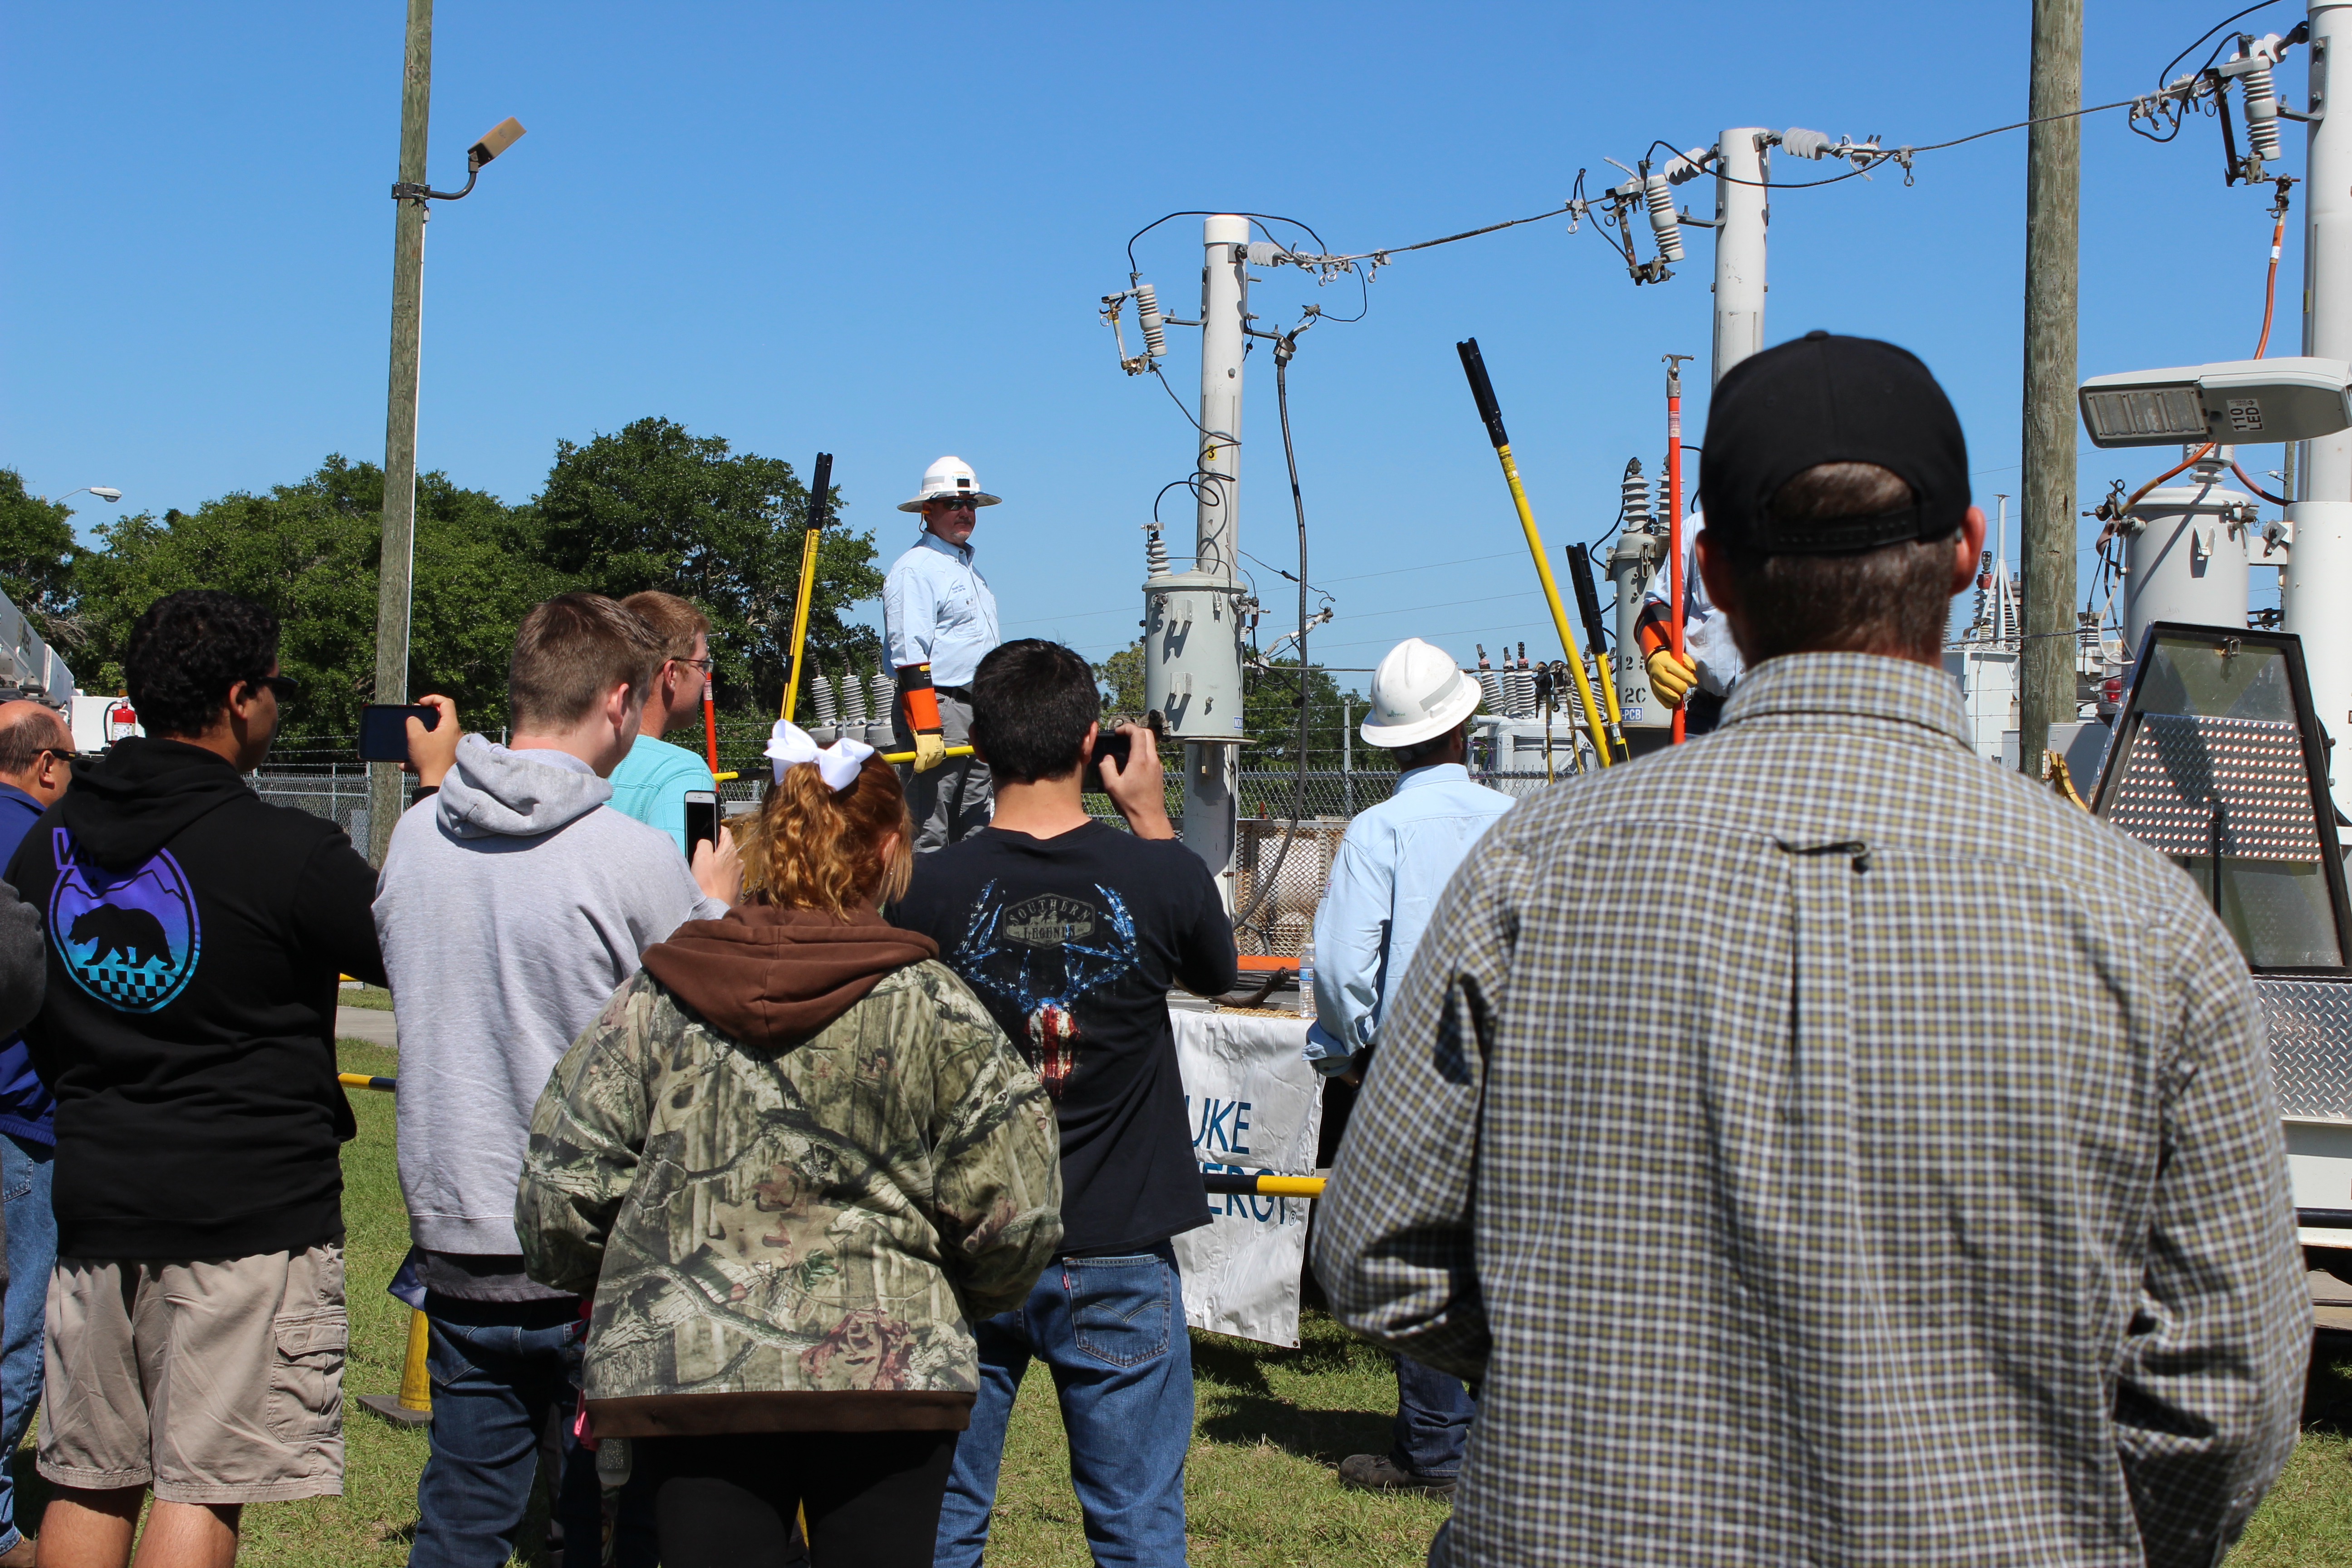 Media Advisory – LSSC & Duke Energy Host Lineworker Appreciation Day in Sumterville